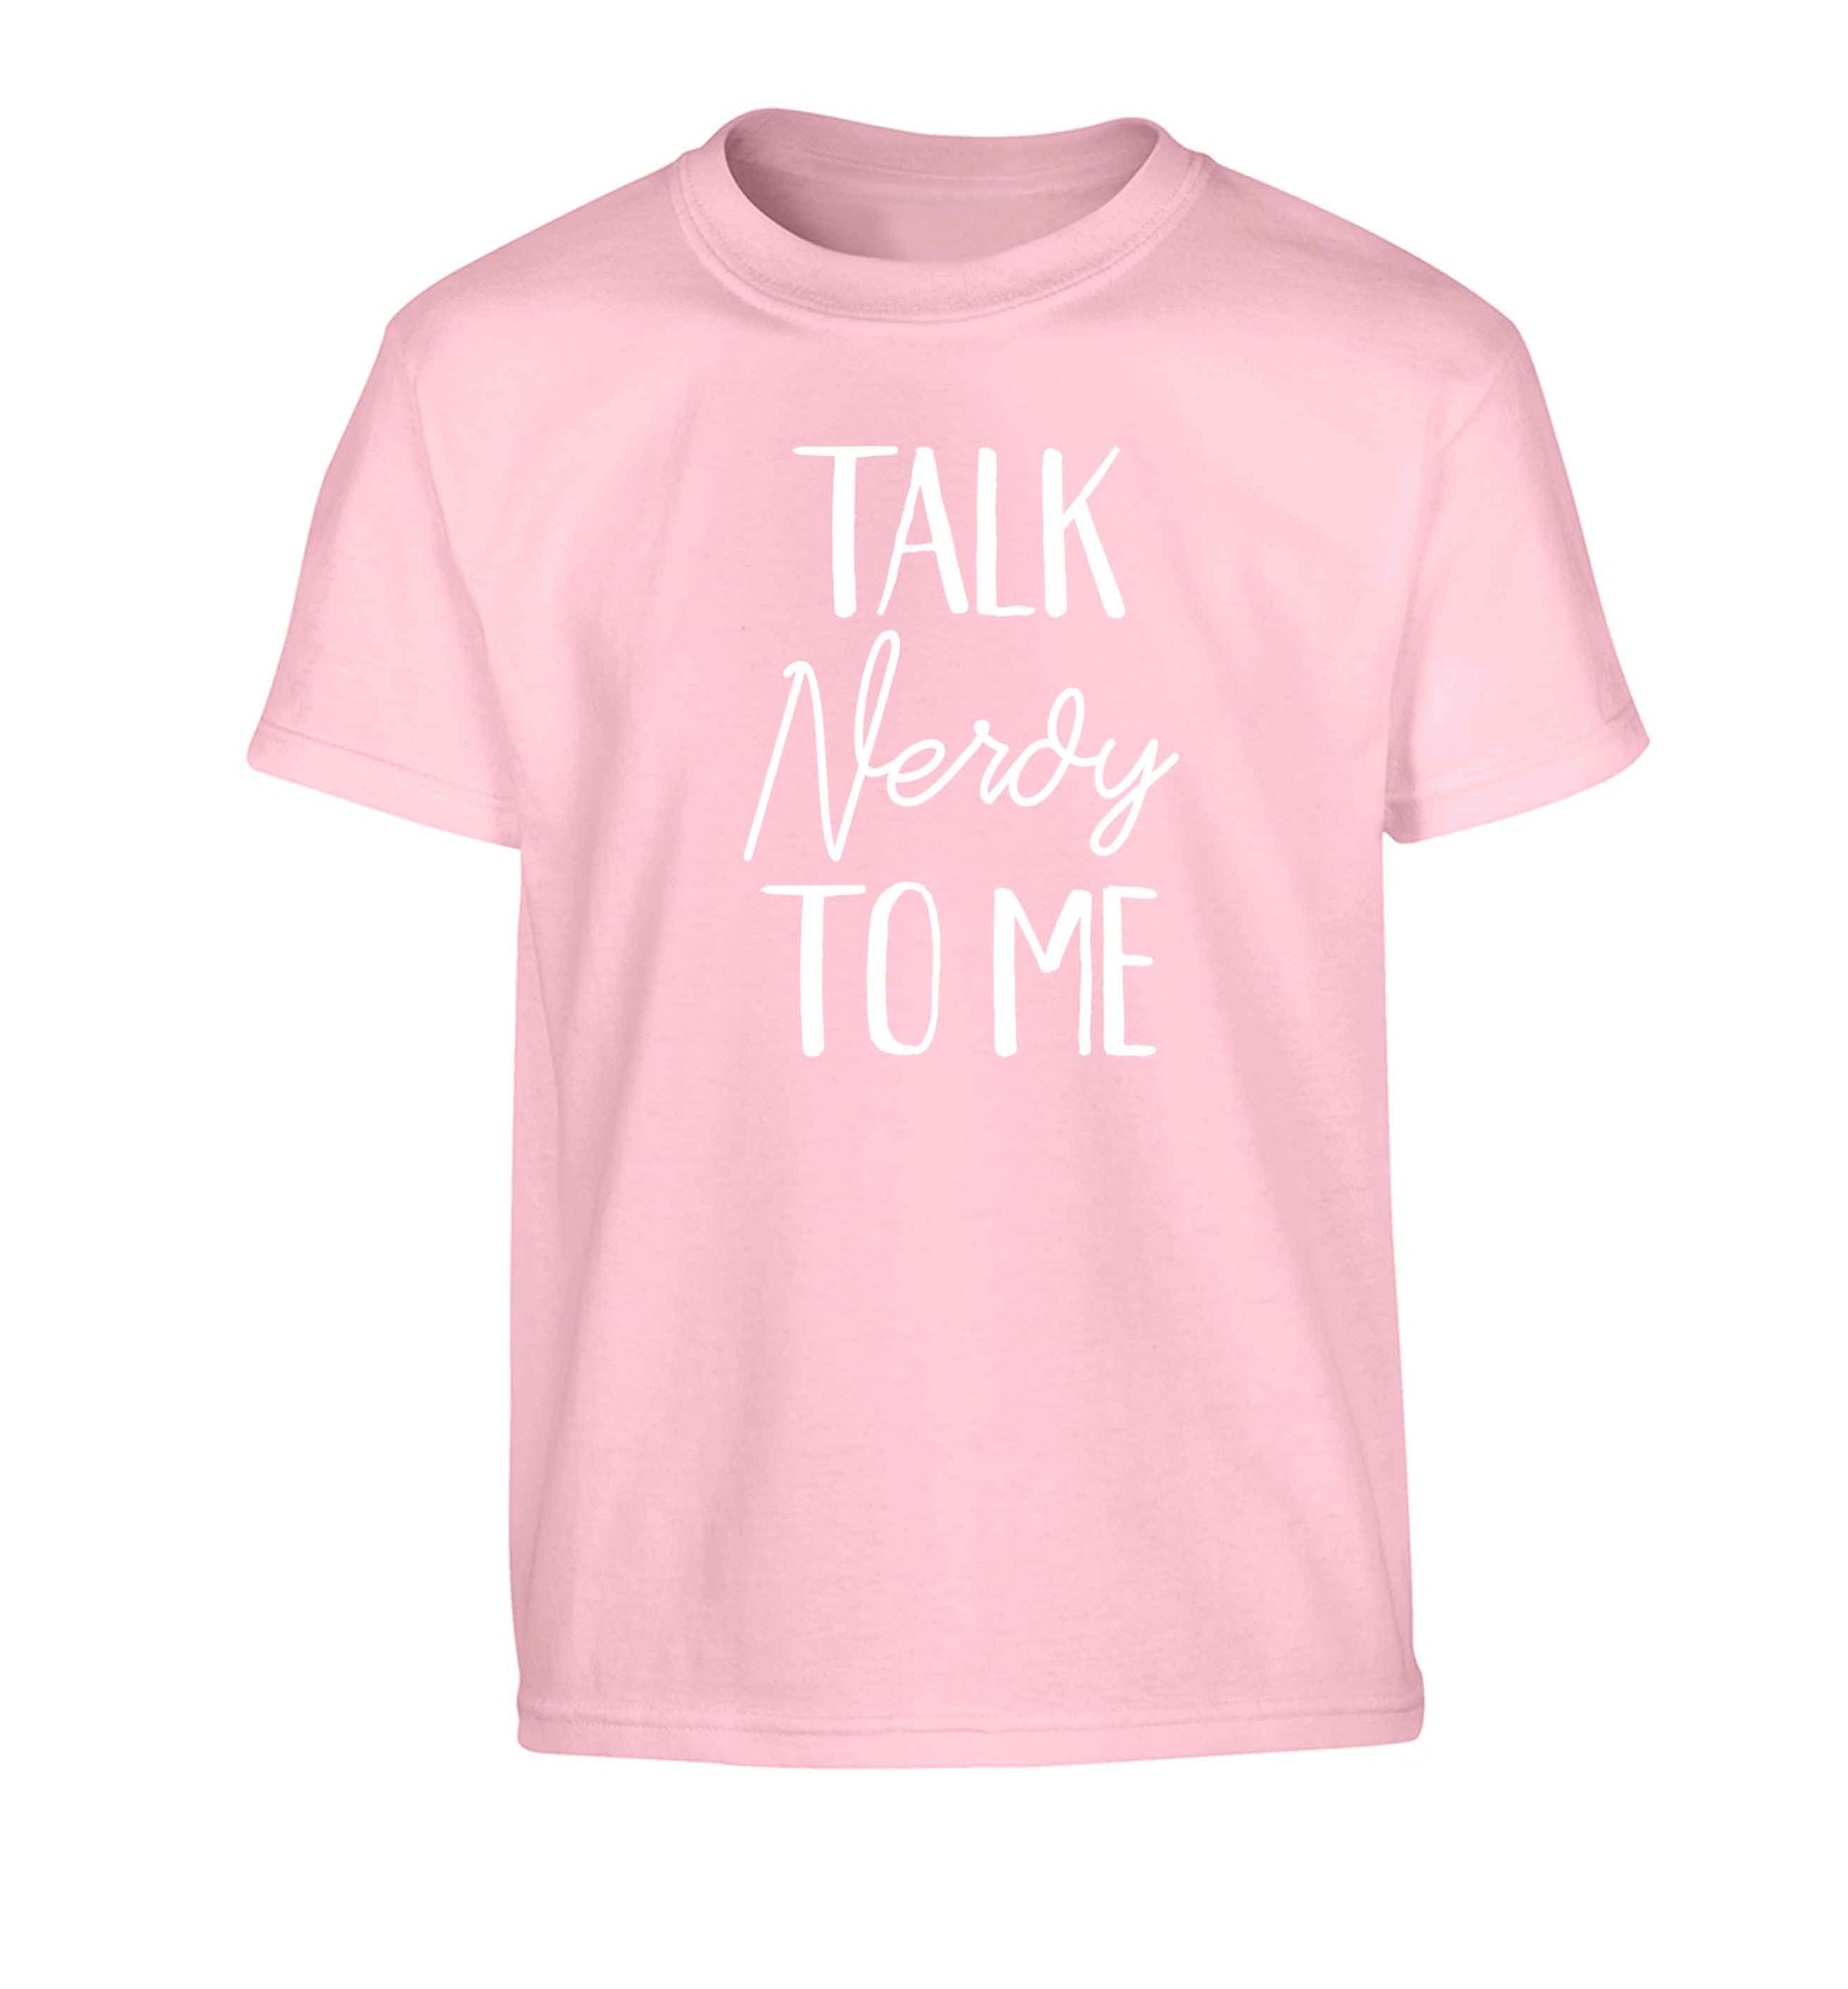 Talk nerdy to me Children's light pink Tshirt 12-13 Years